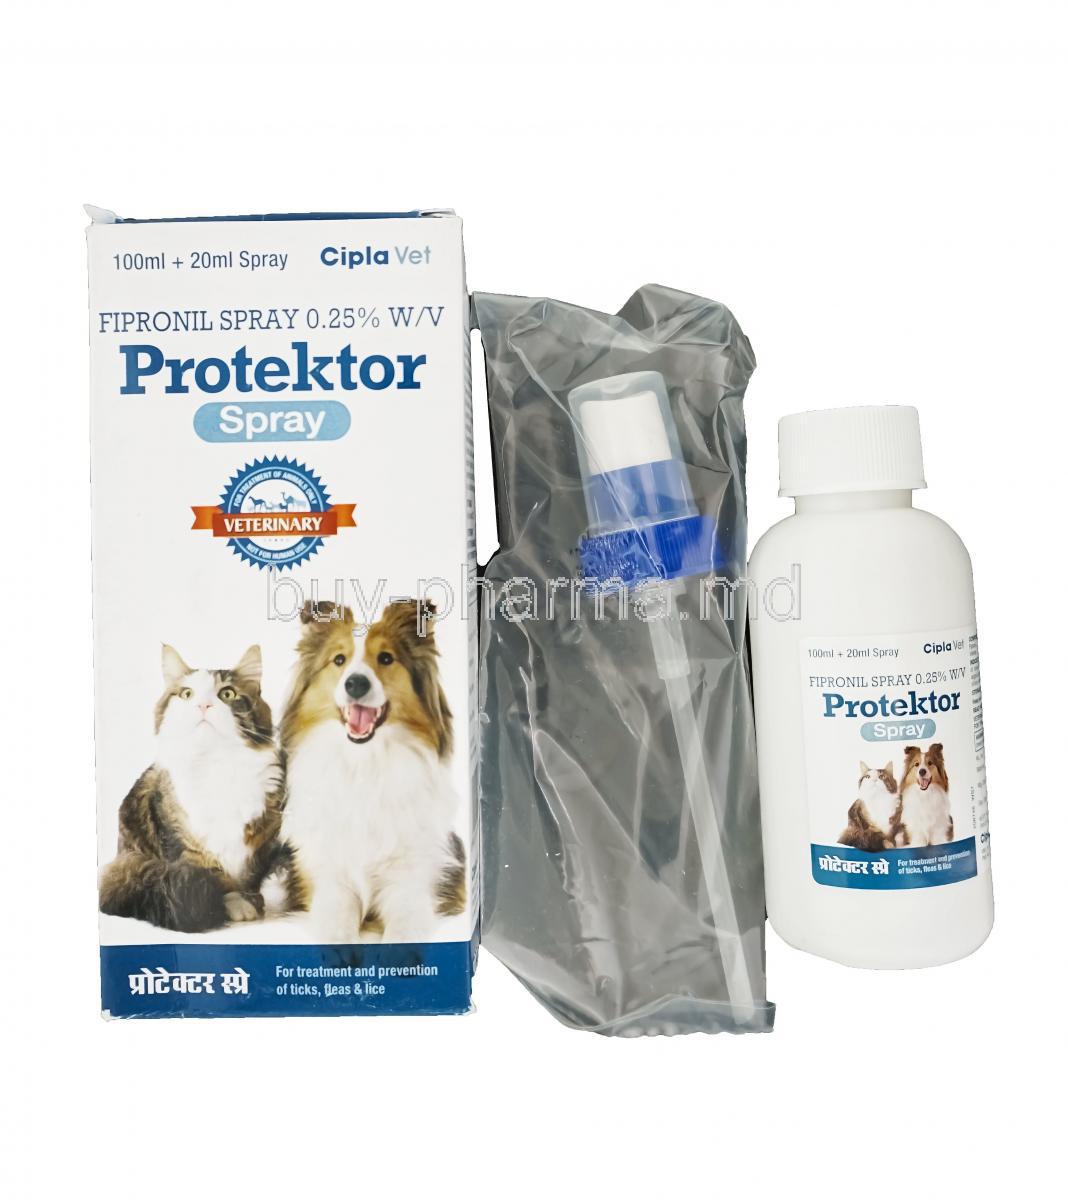 Protektor Spray, Fipronil Spray 0.25% 100ml + 20ml